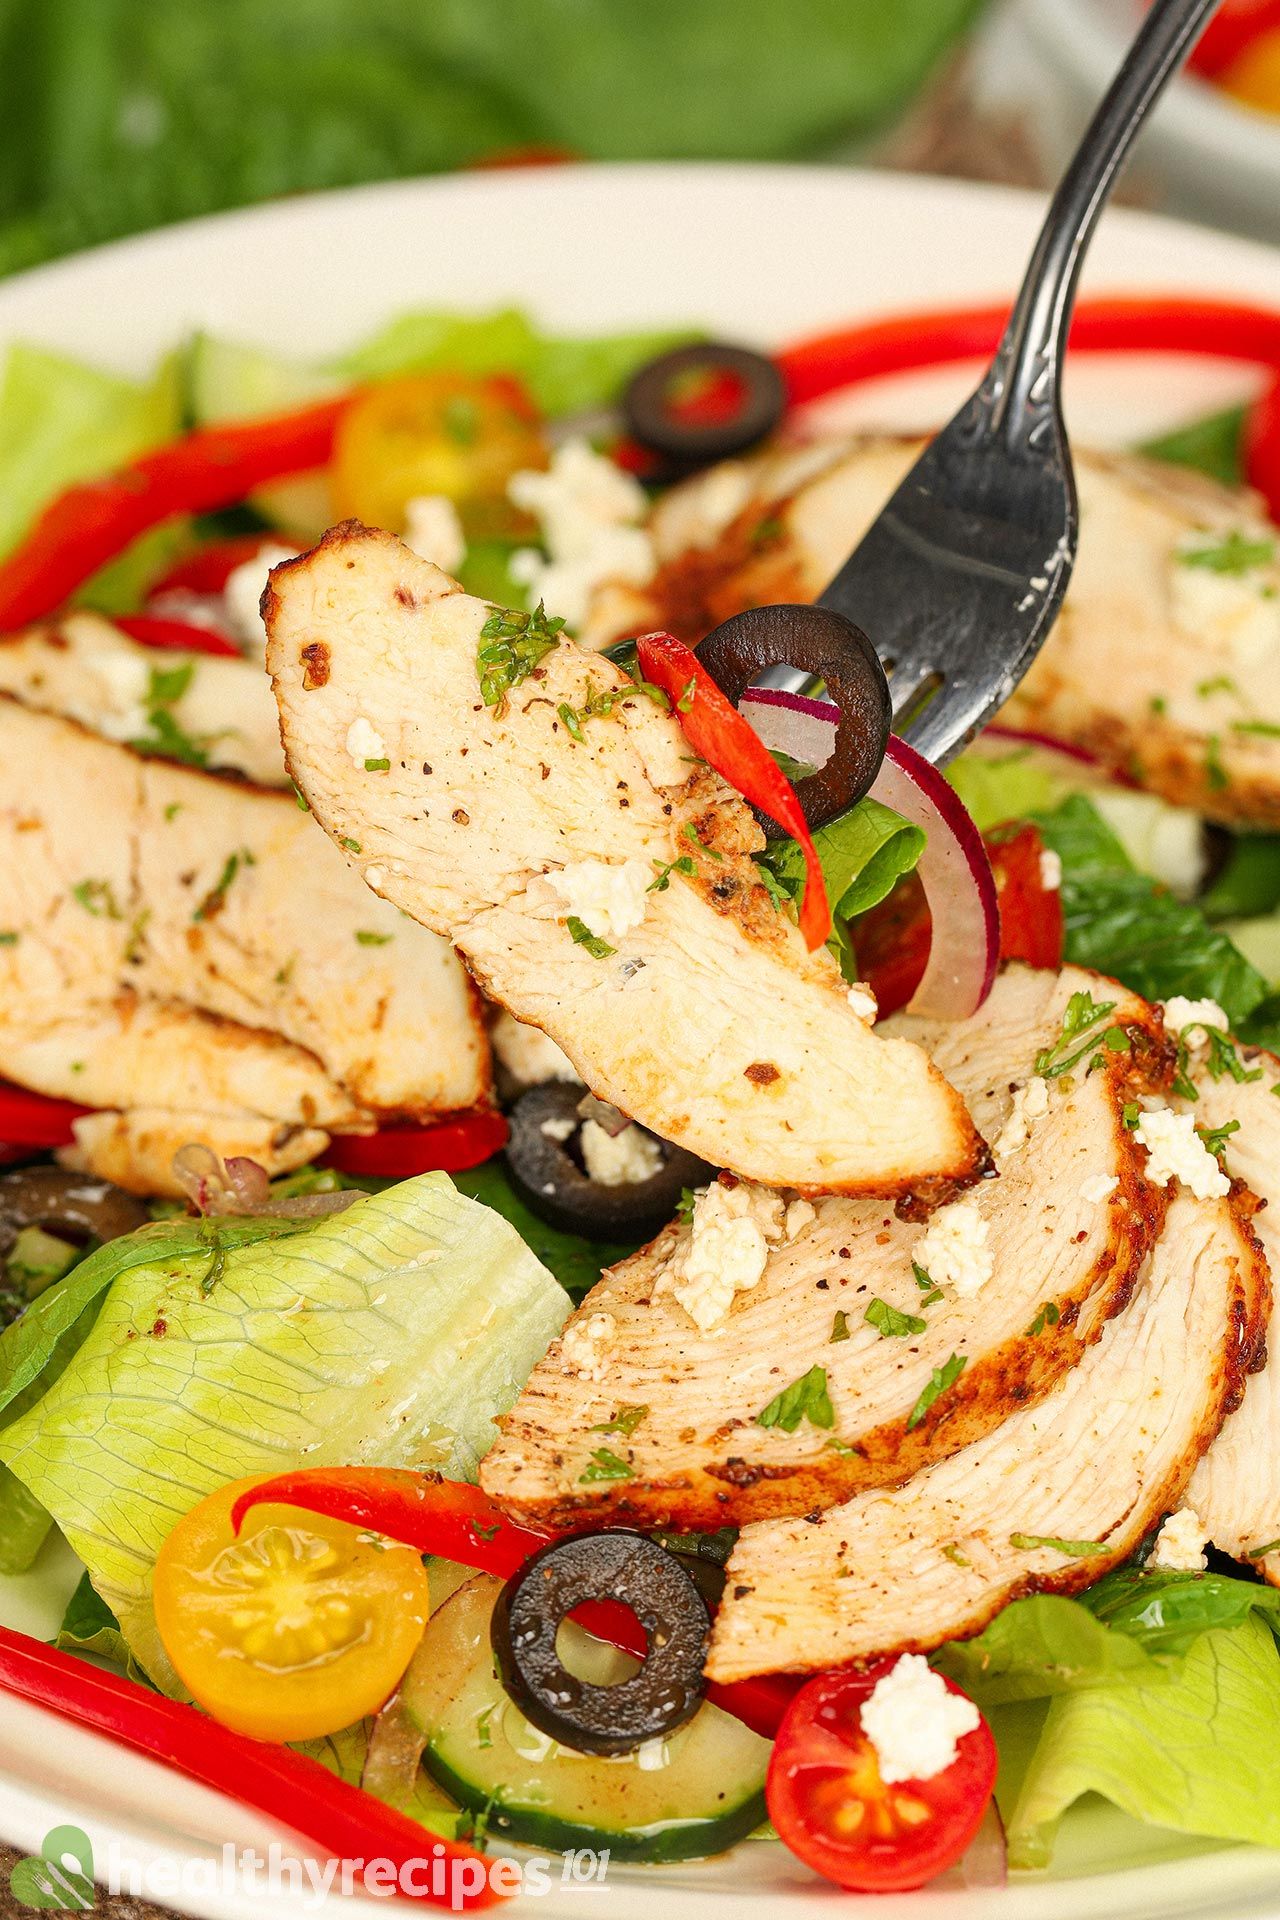 Is Greek Chicken Salad Healthy?